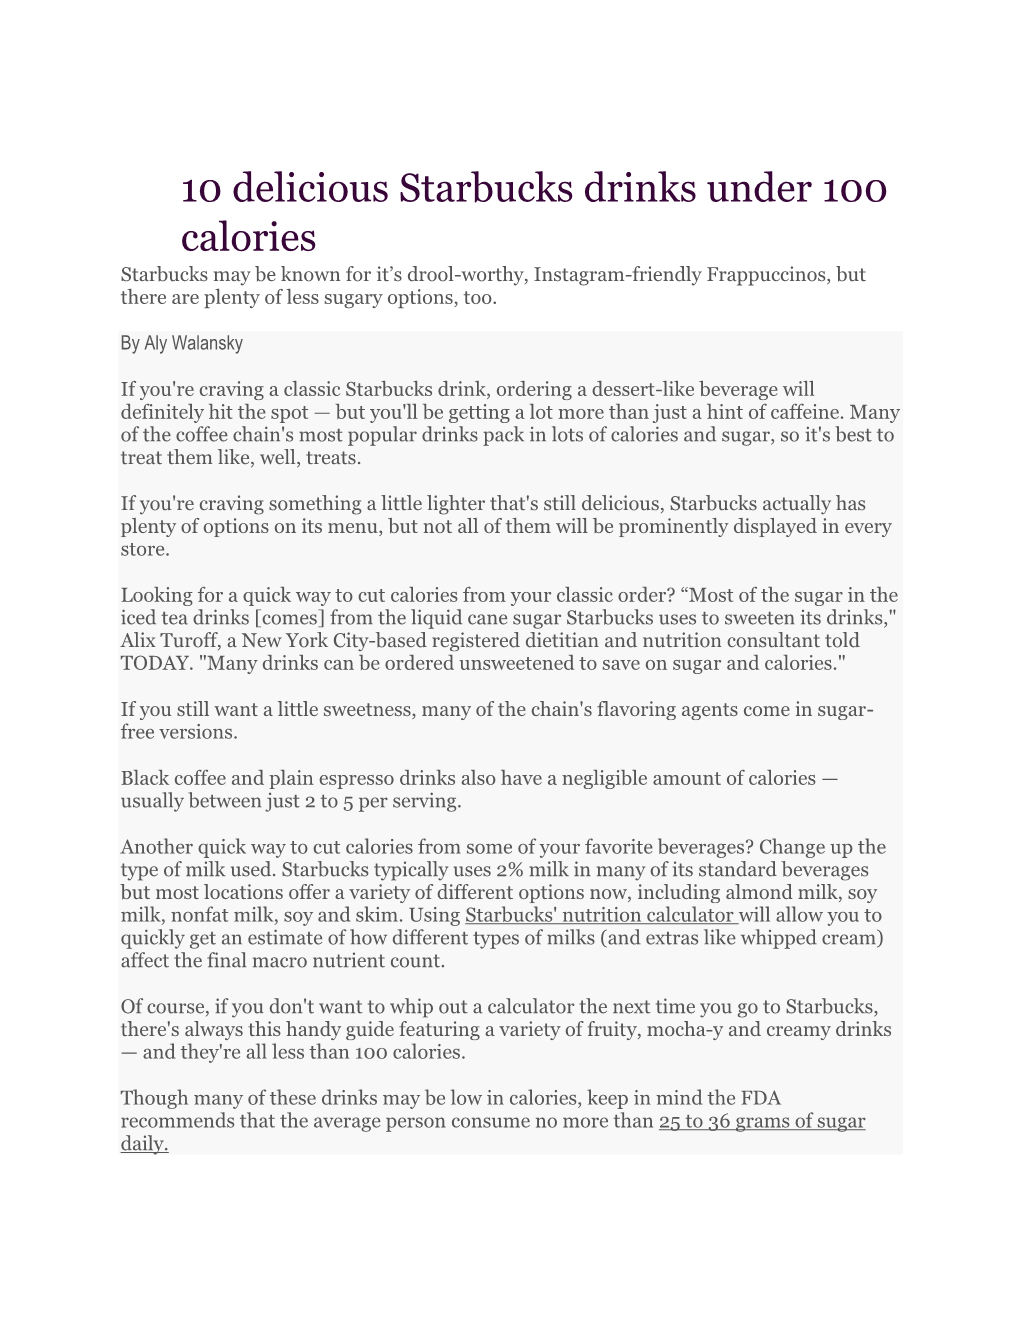 10 Delicious Starbucks Drinks Under 100 Calories